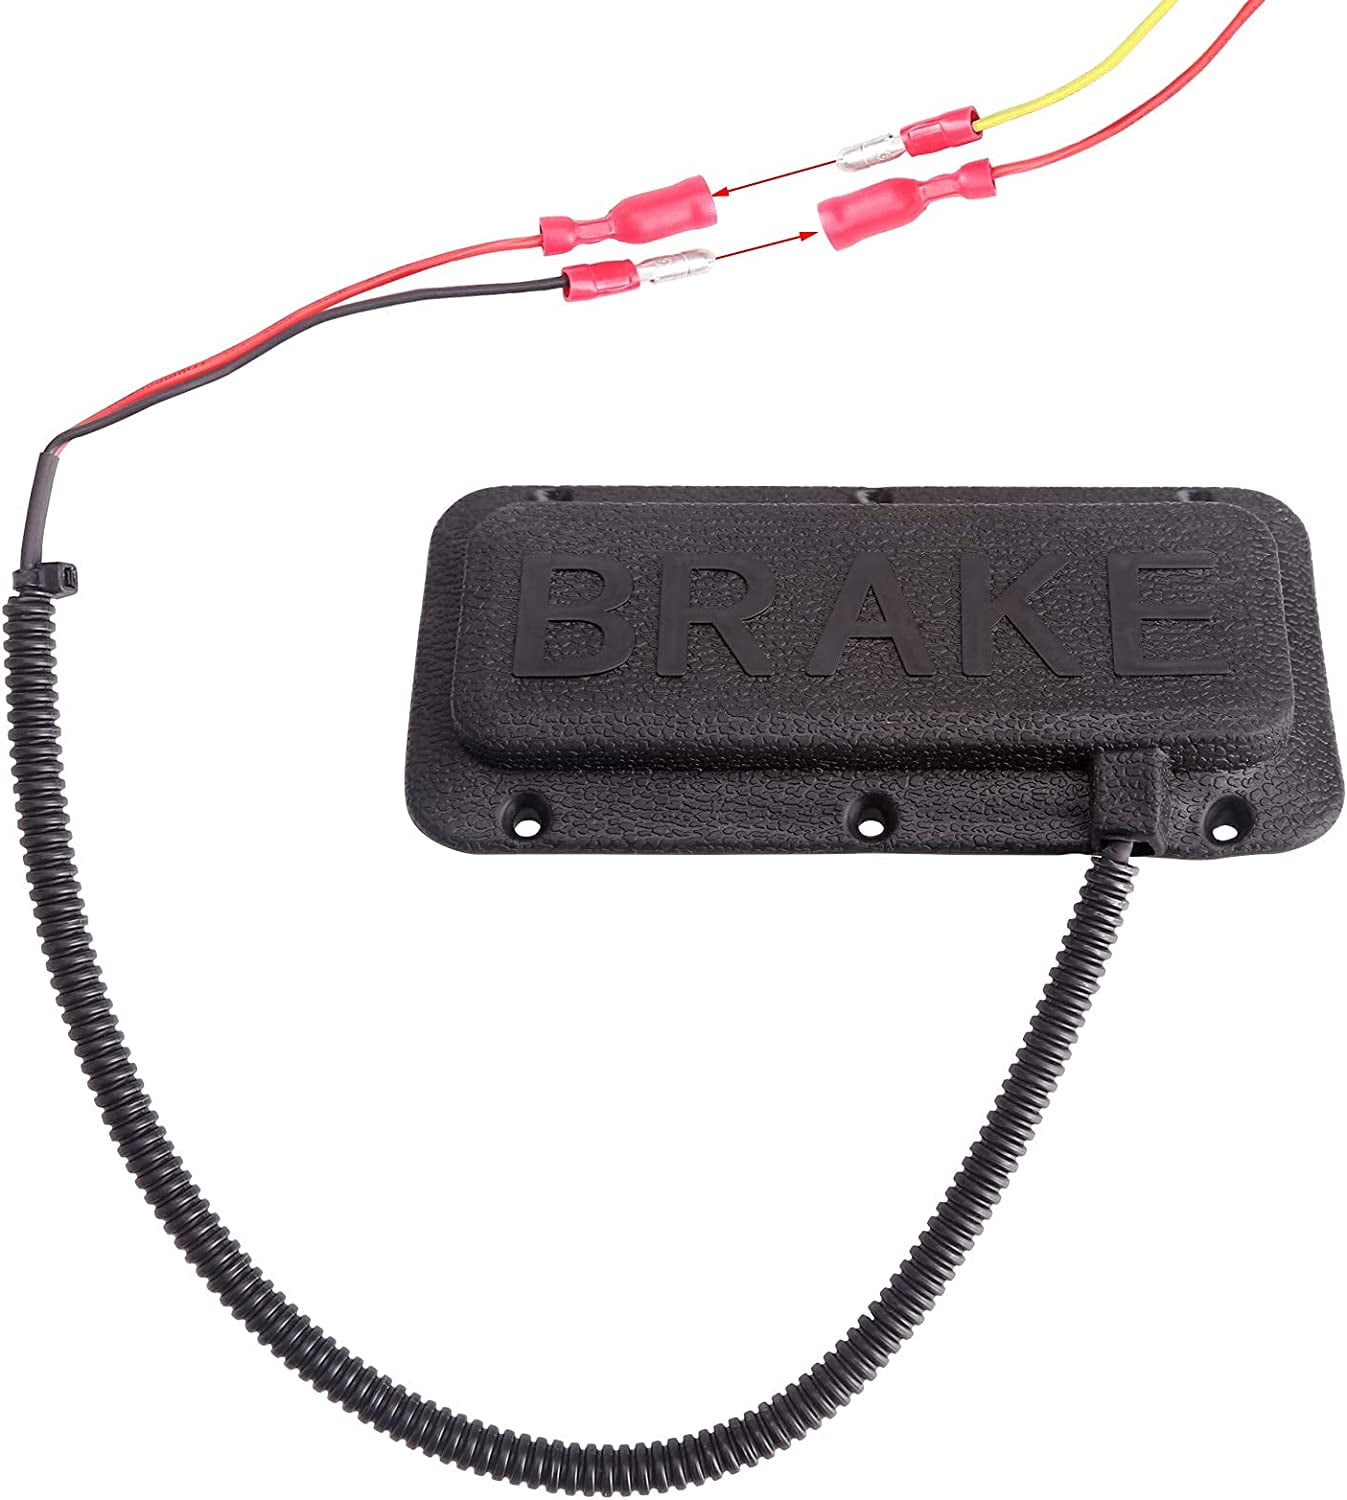 10L0L Golf Cart Turn Signal Kit with Horn Brake Hazard Blinker Light Switch  for Yamaha EZGO Club Car,9-pin Plug Wiring Harness (Must Input 12 Volts) 